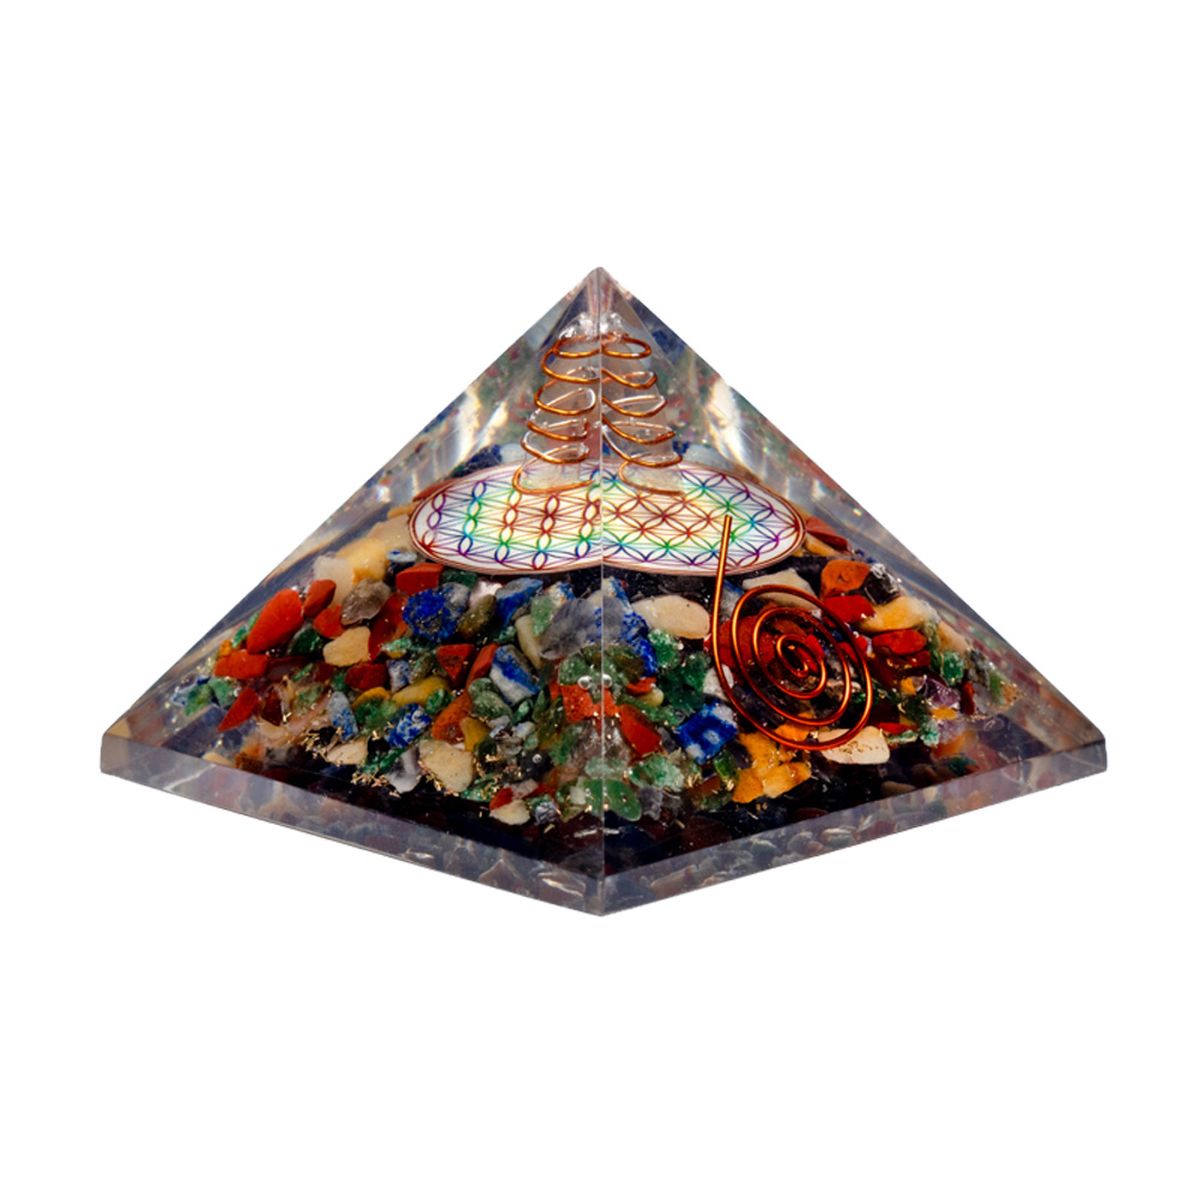 Pyramide Orgonite fleur de Vie colore - 7.5 x 7.5 x 6 cm